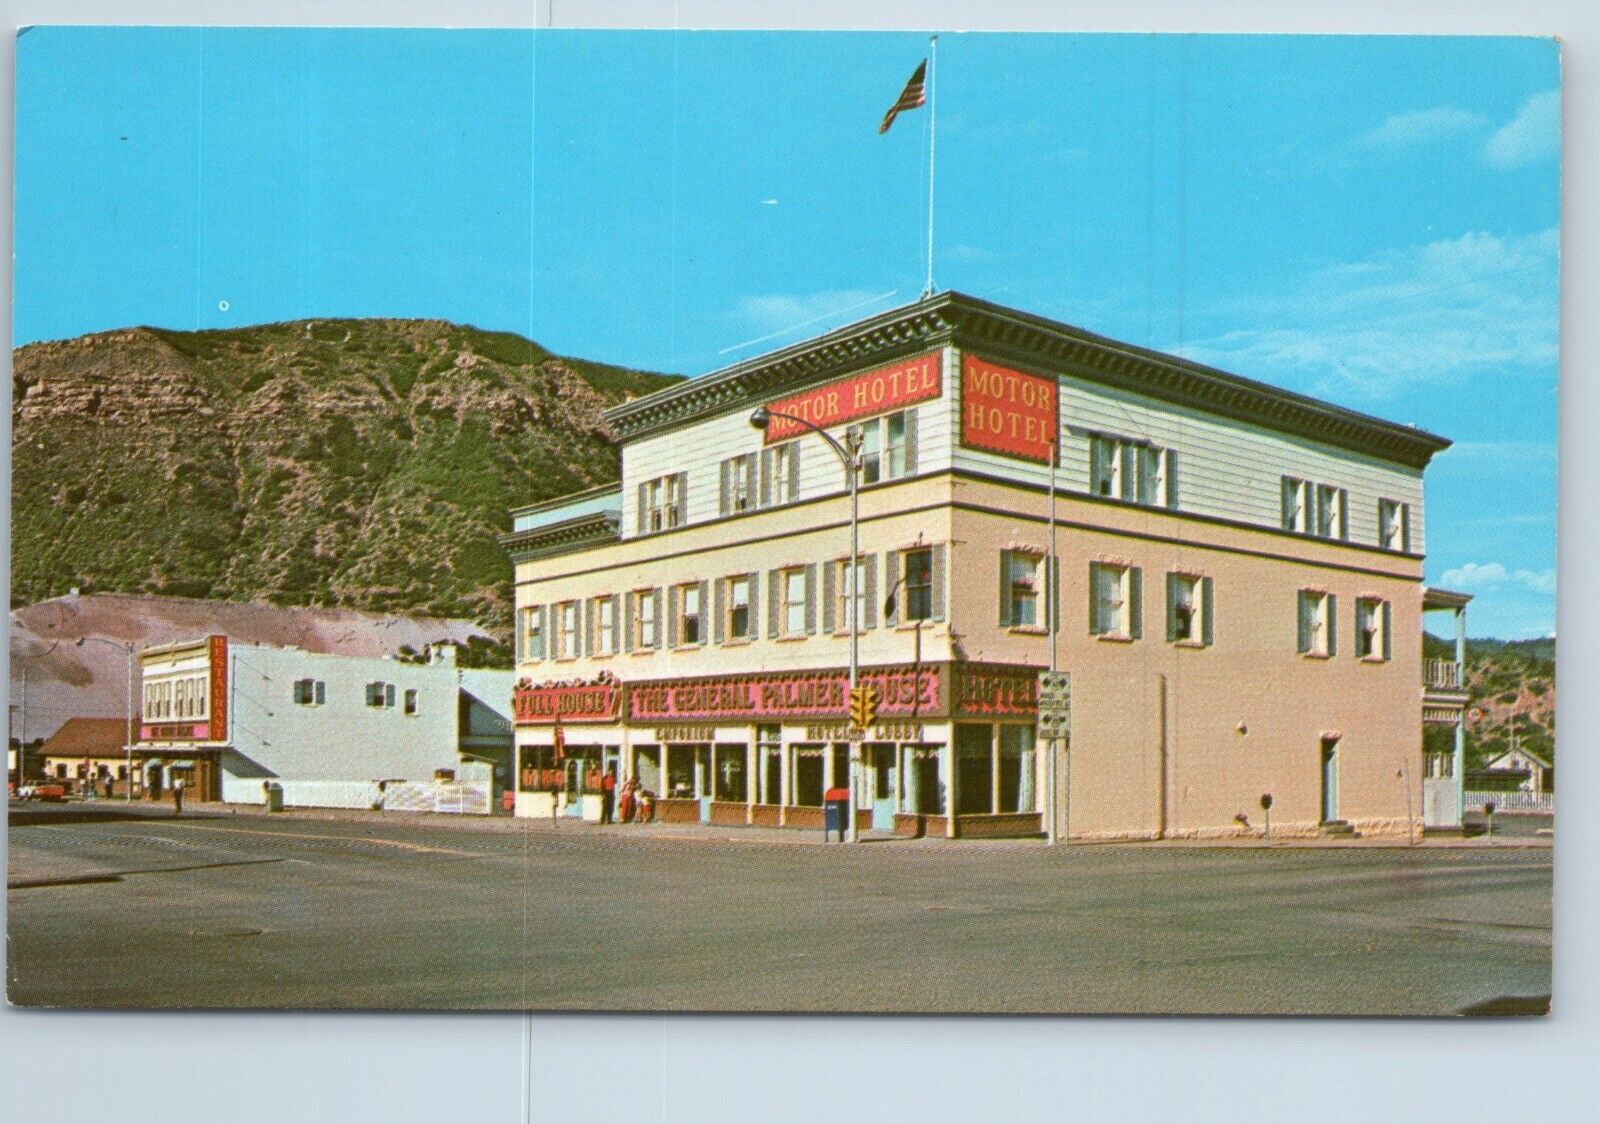 Postcard The General Palmer House Motor Hotel Durango Colorado